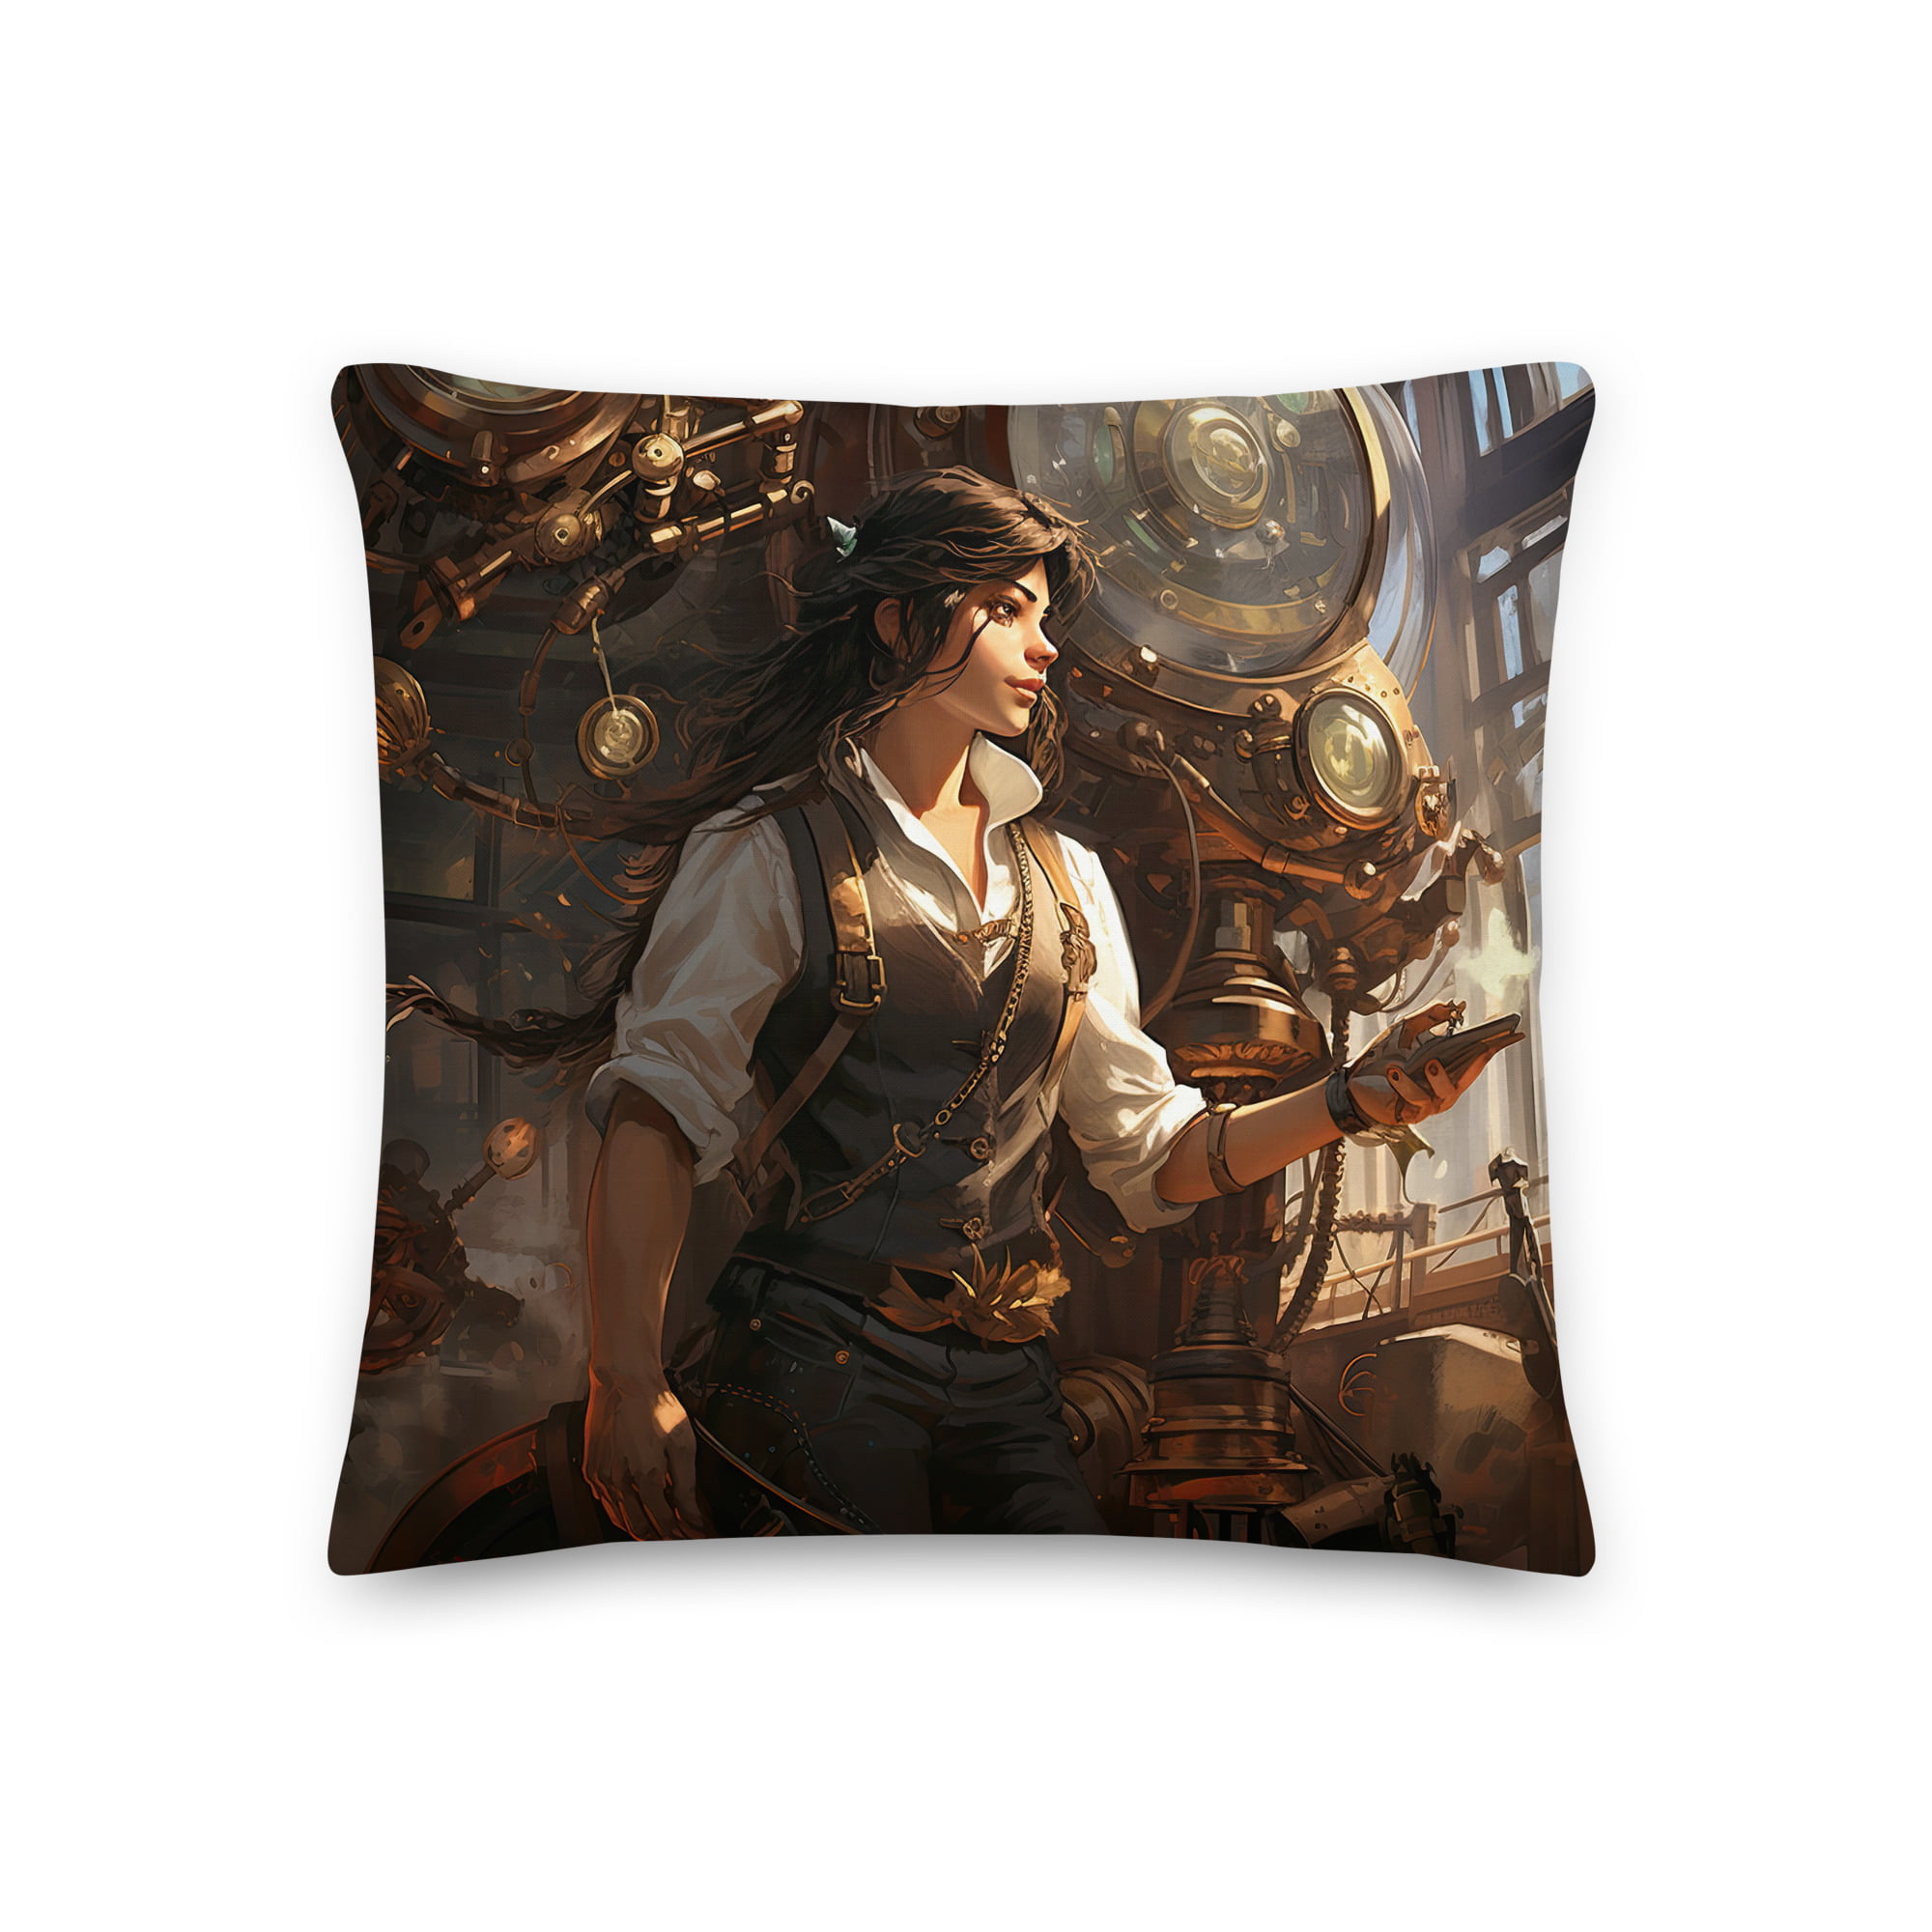 Steampunk Princess Premium Throw Pillow – 18×18